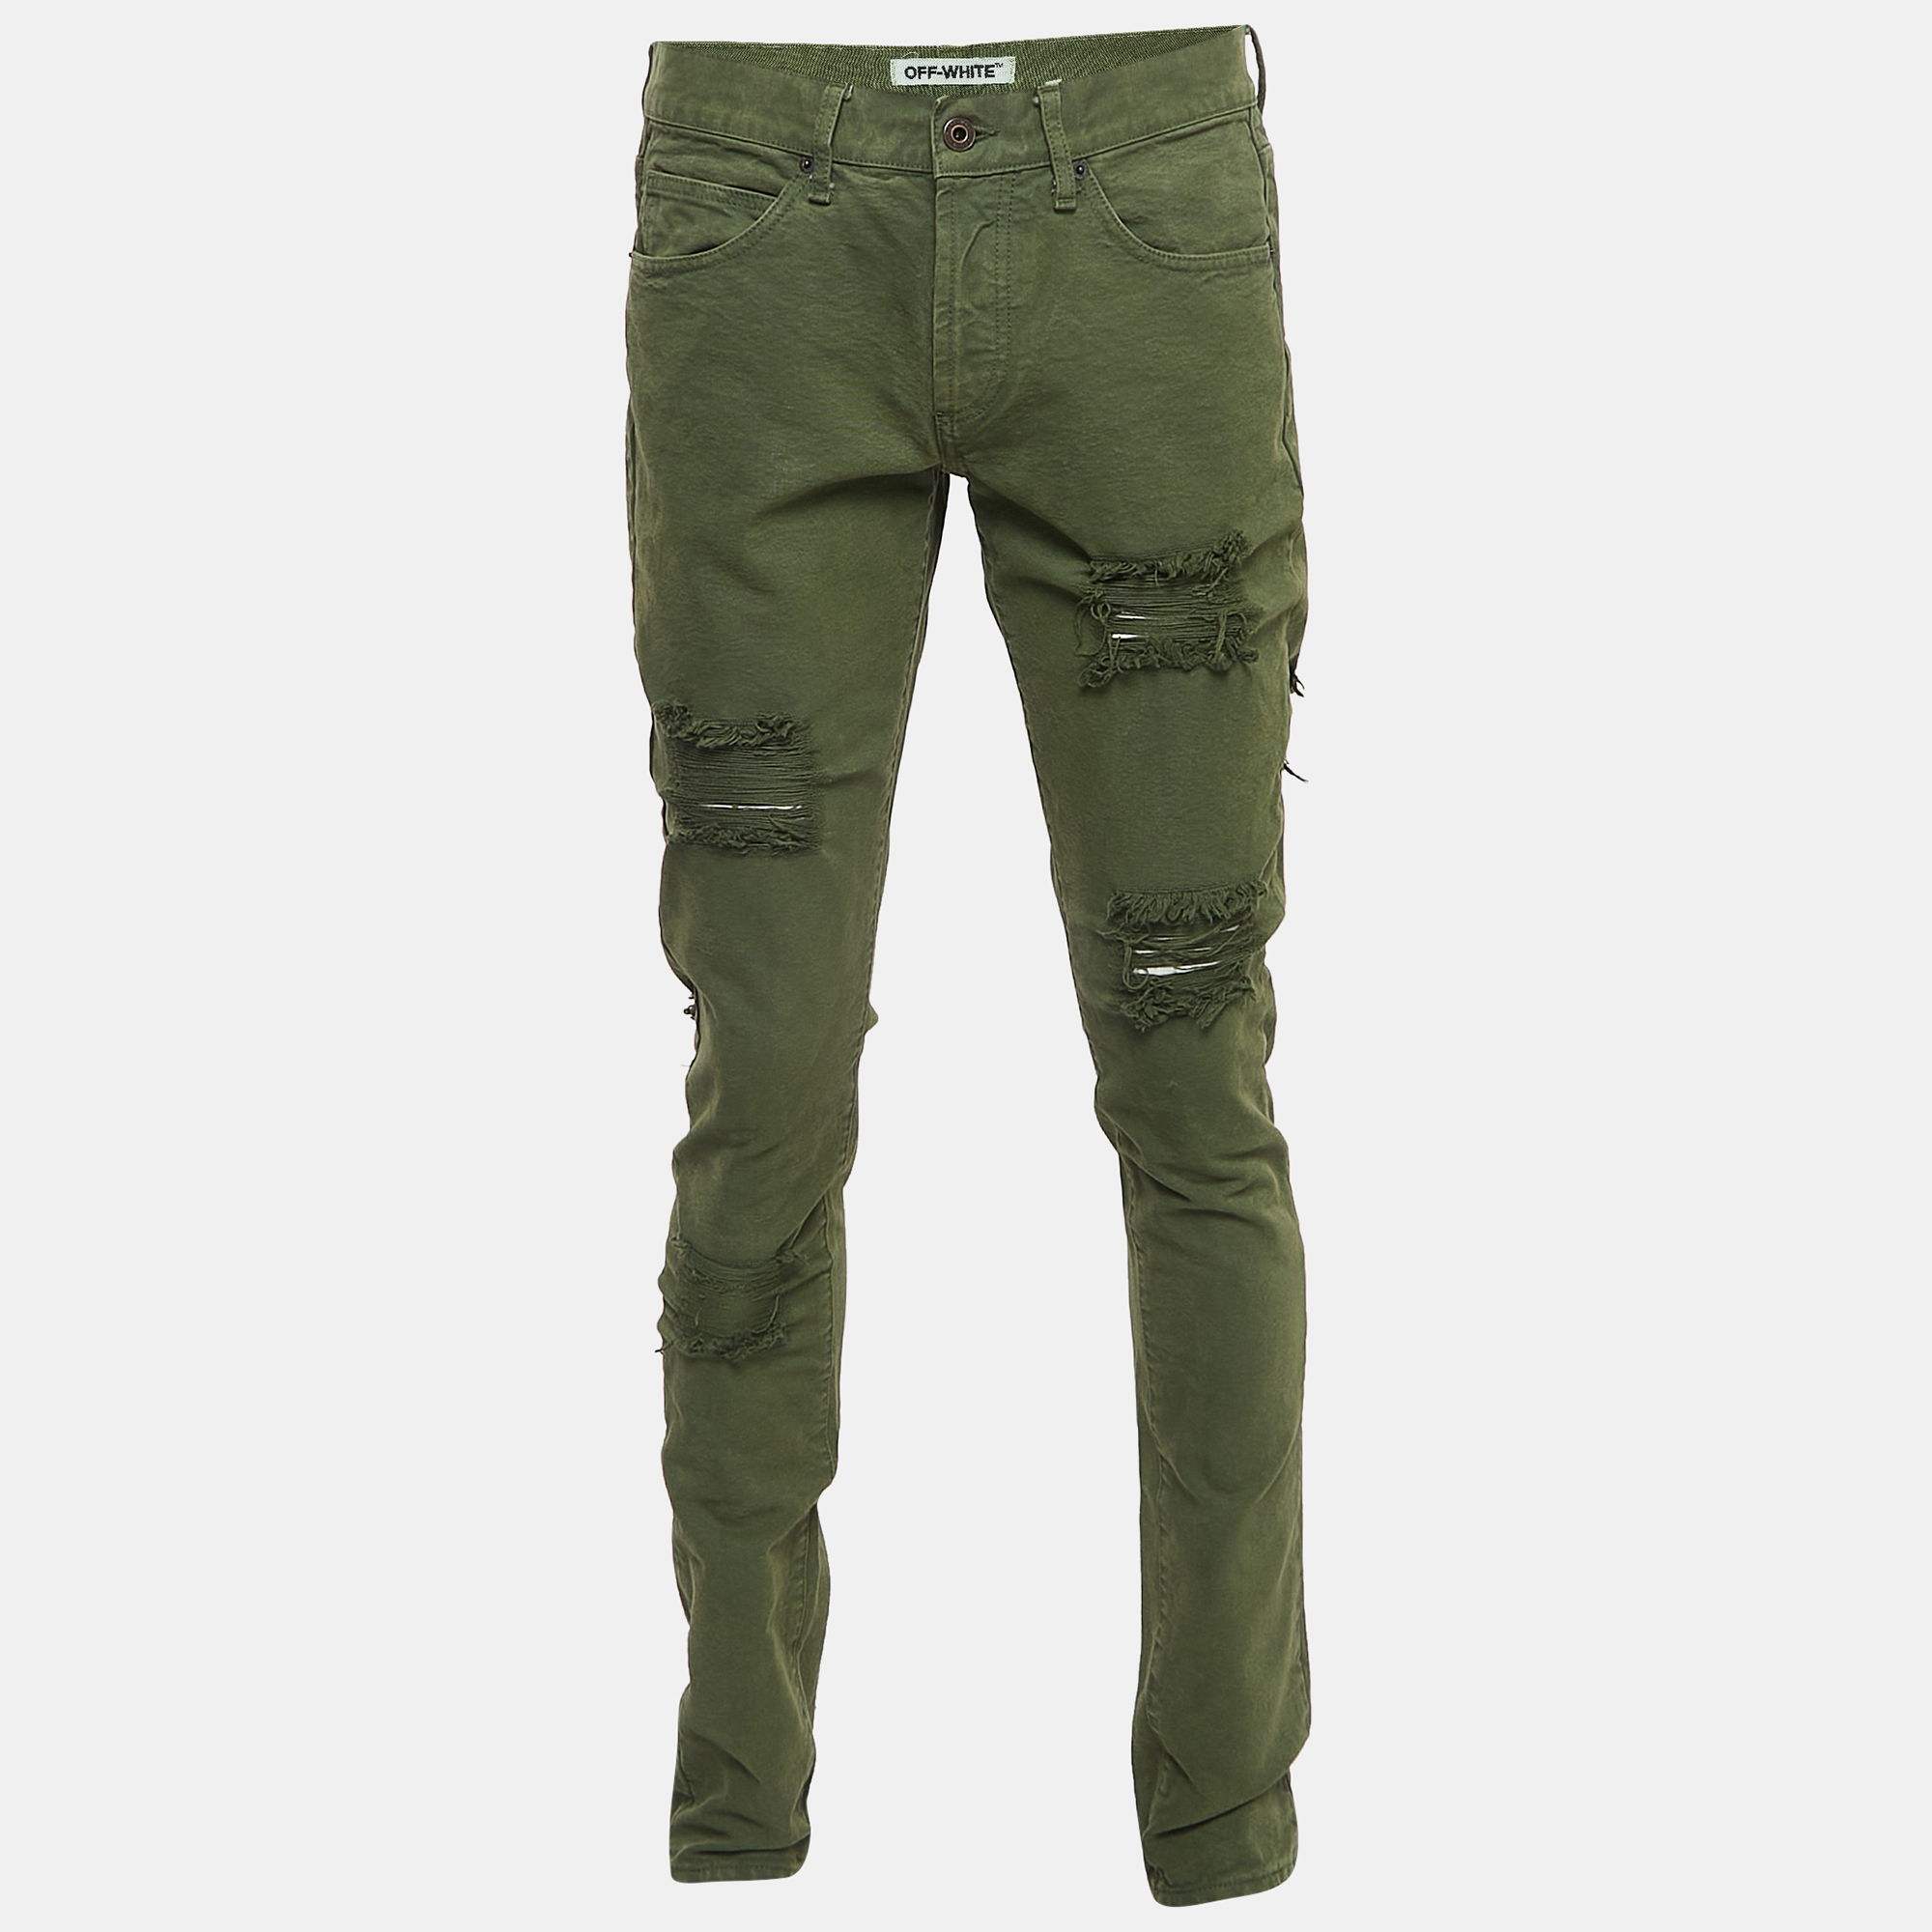 Off-White Military Green Distressed Denim Jeans M Waist 32